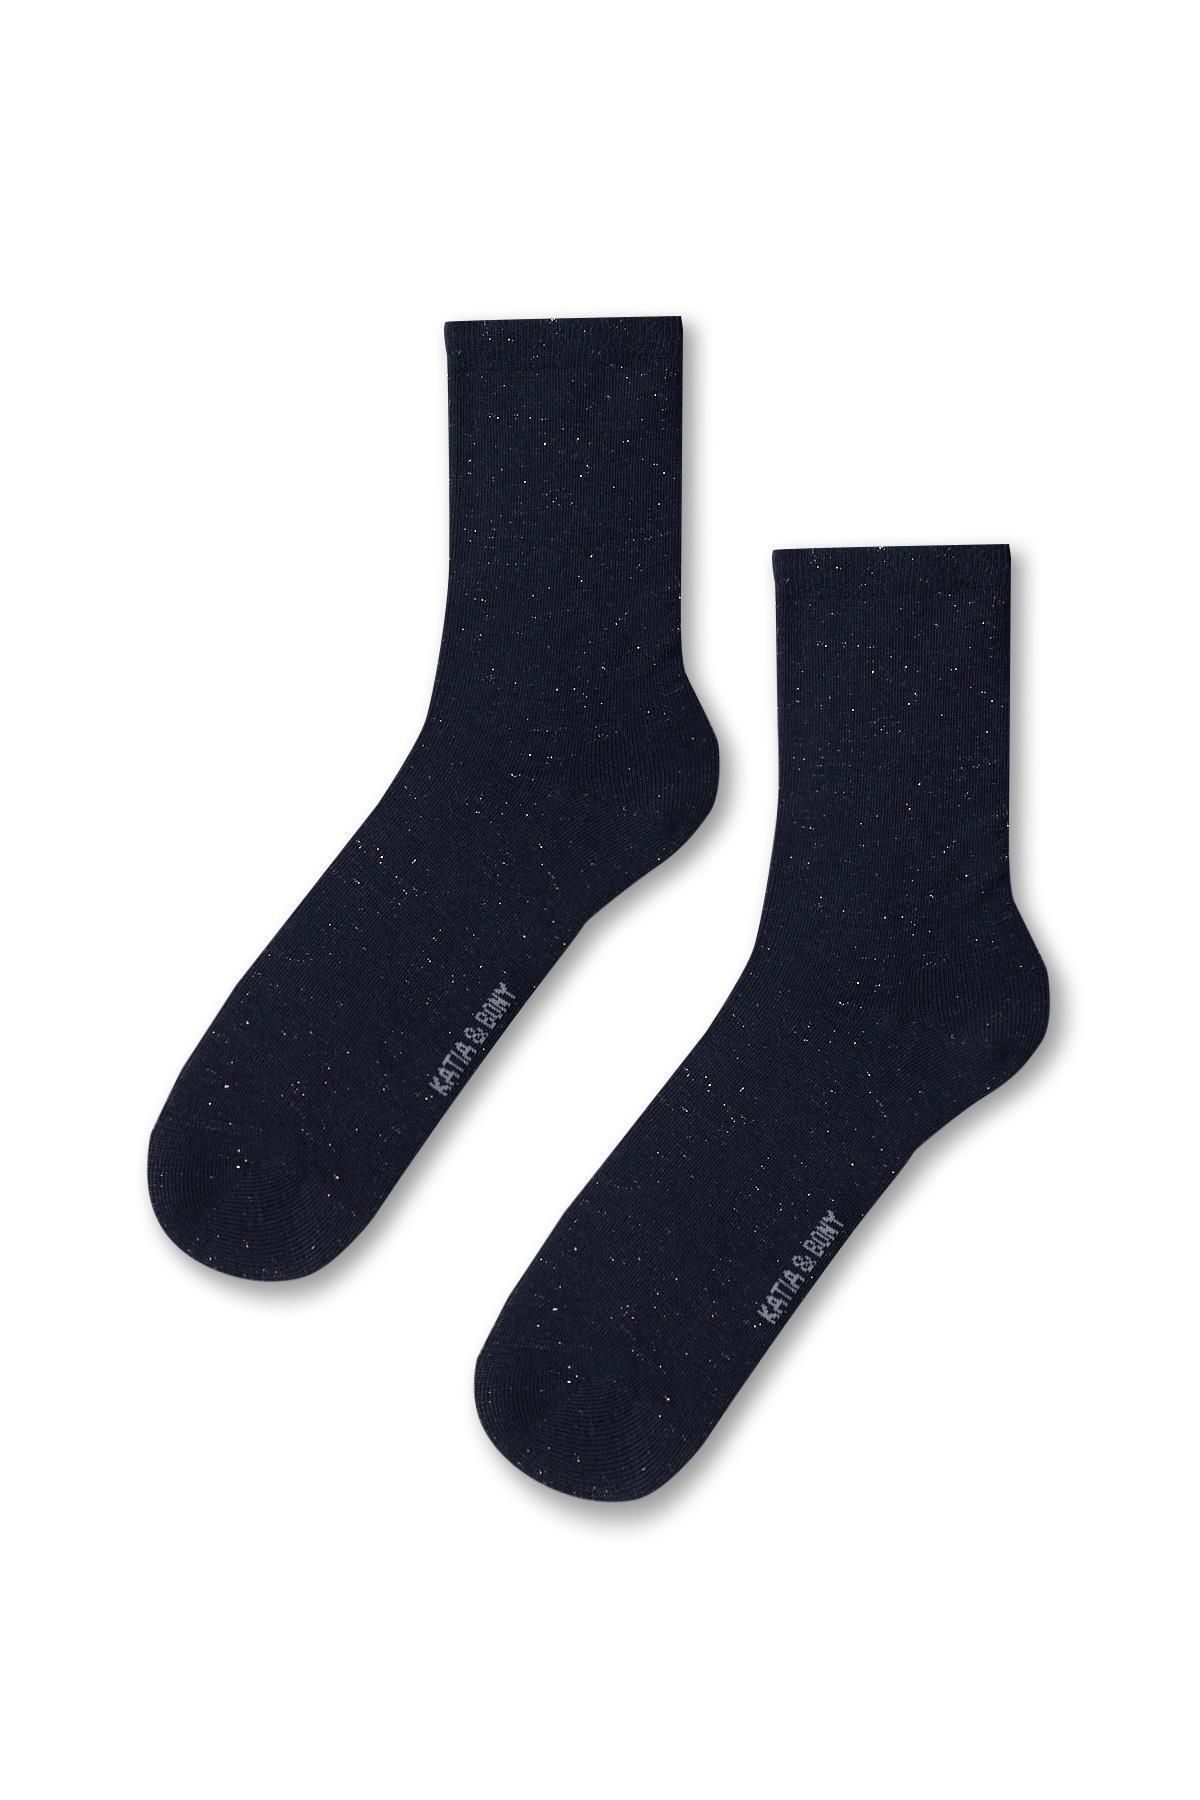 Katia & Bony Kadın Lacivert Renkli Sim Detaylı Soket Çorap